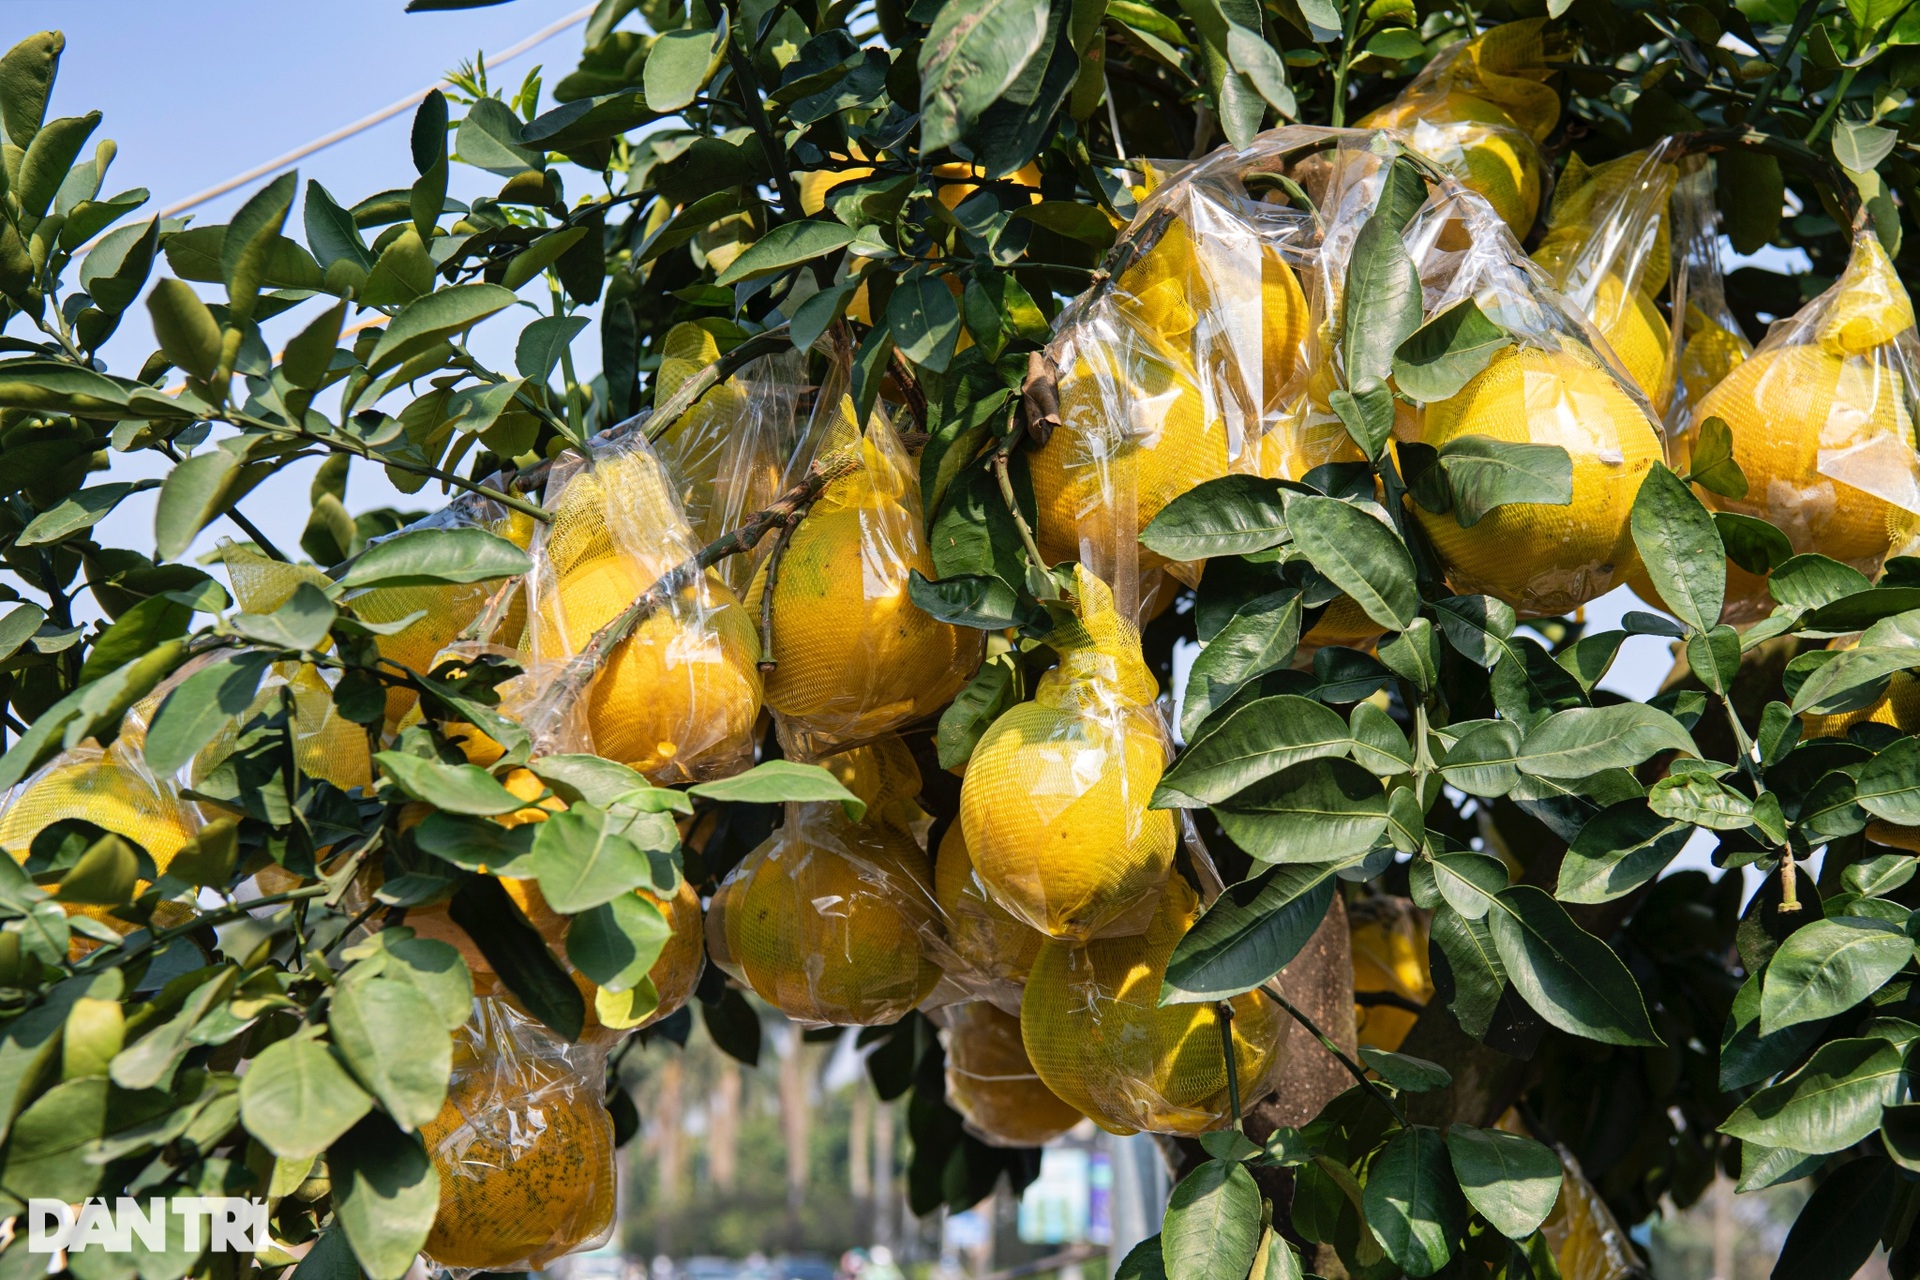 Unique 400-fruit Dien pomelo tree for sale for 200 million dong in Hanoi - 17